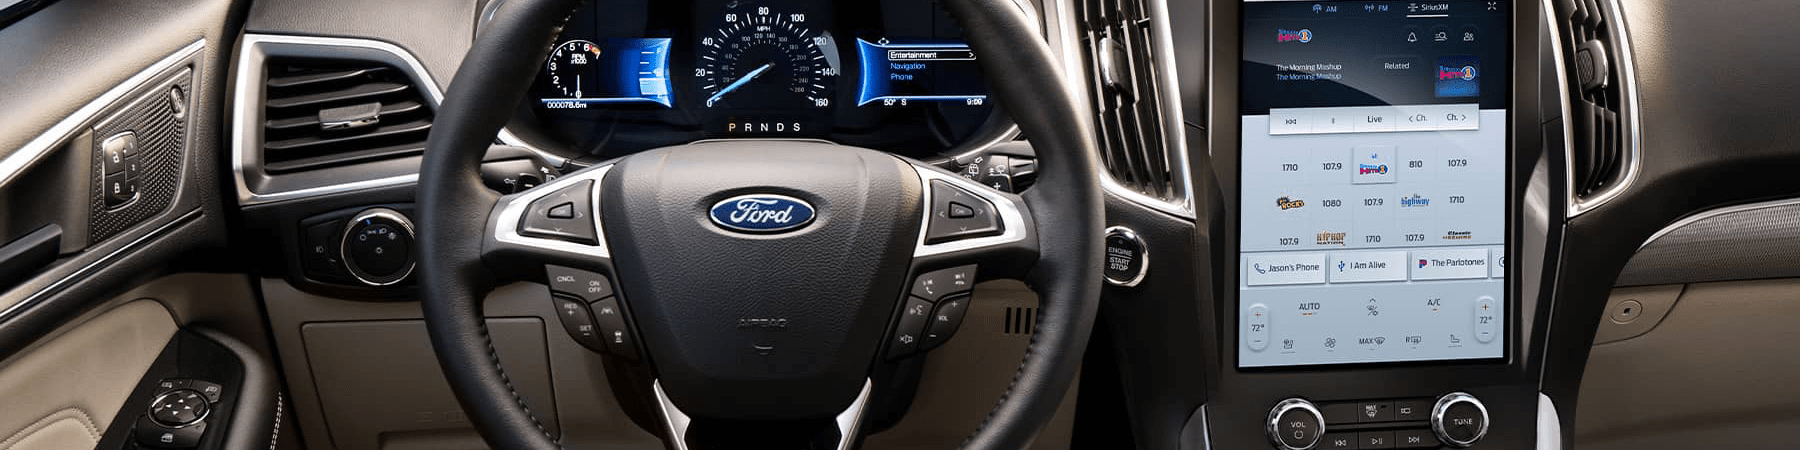 2021 Ford Edge interior dashboard